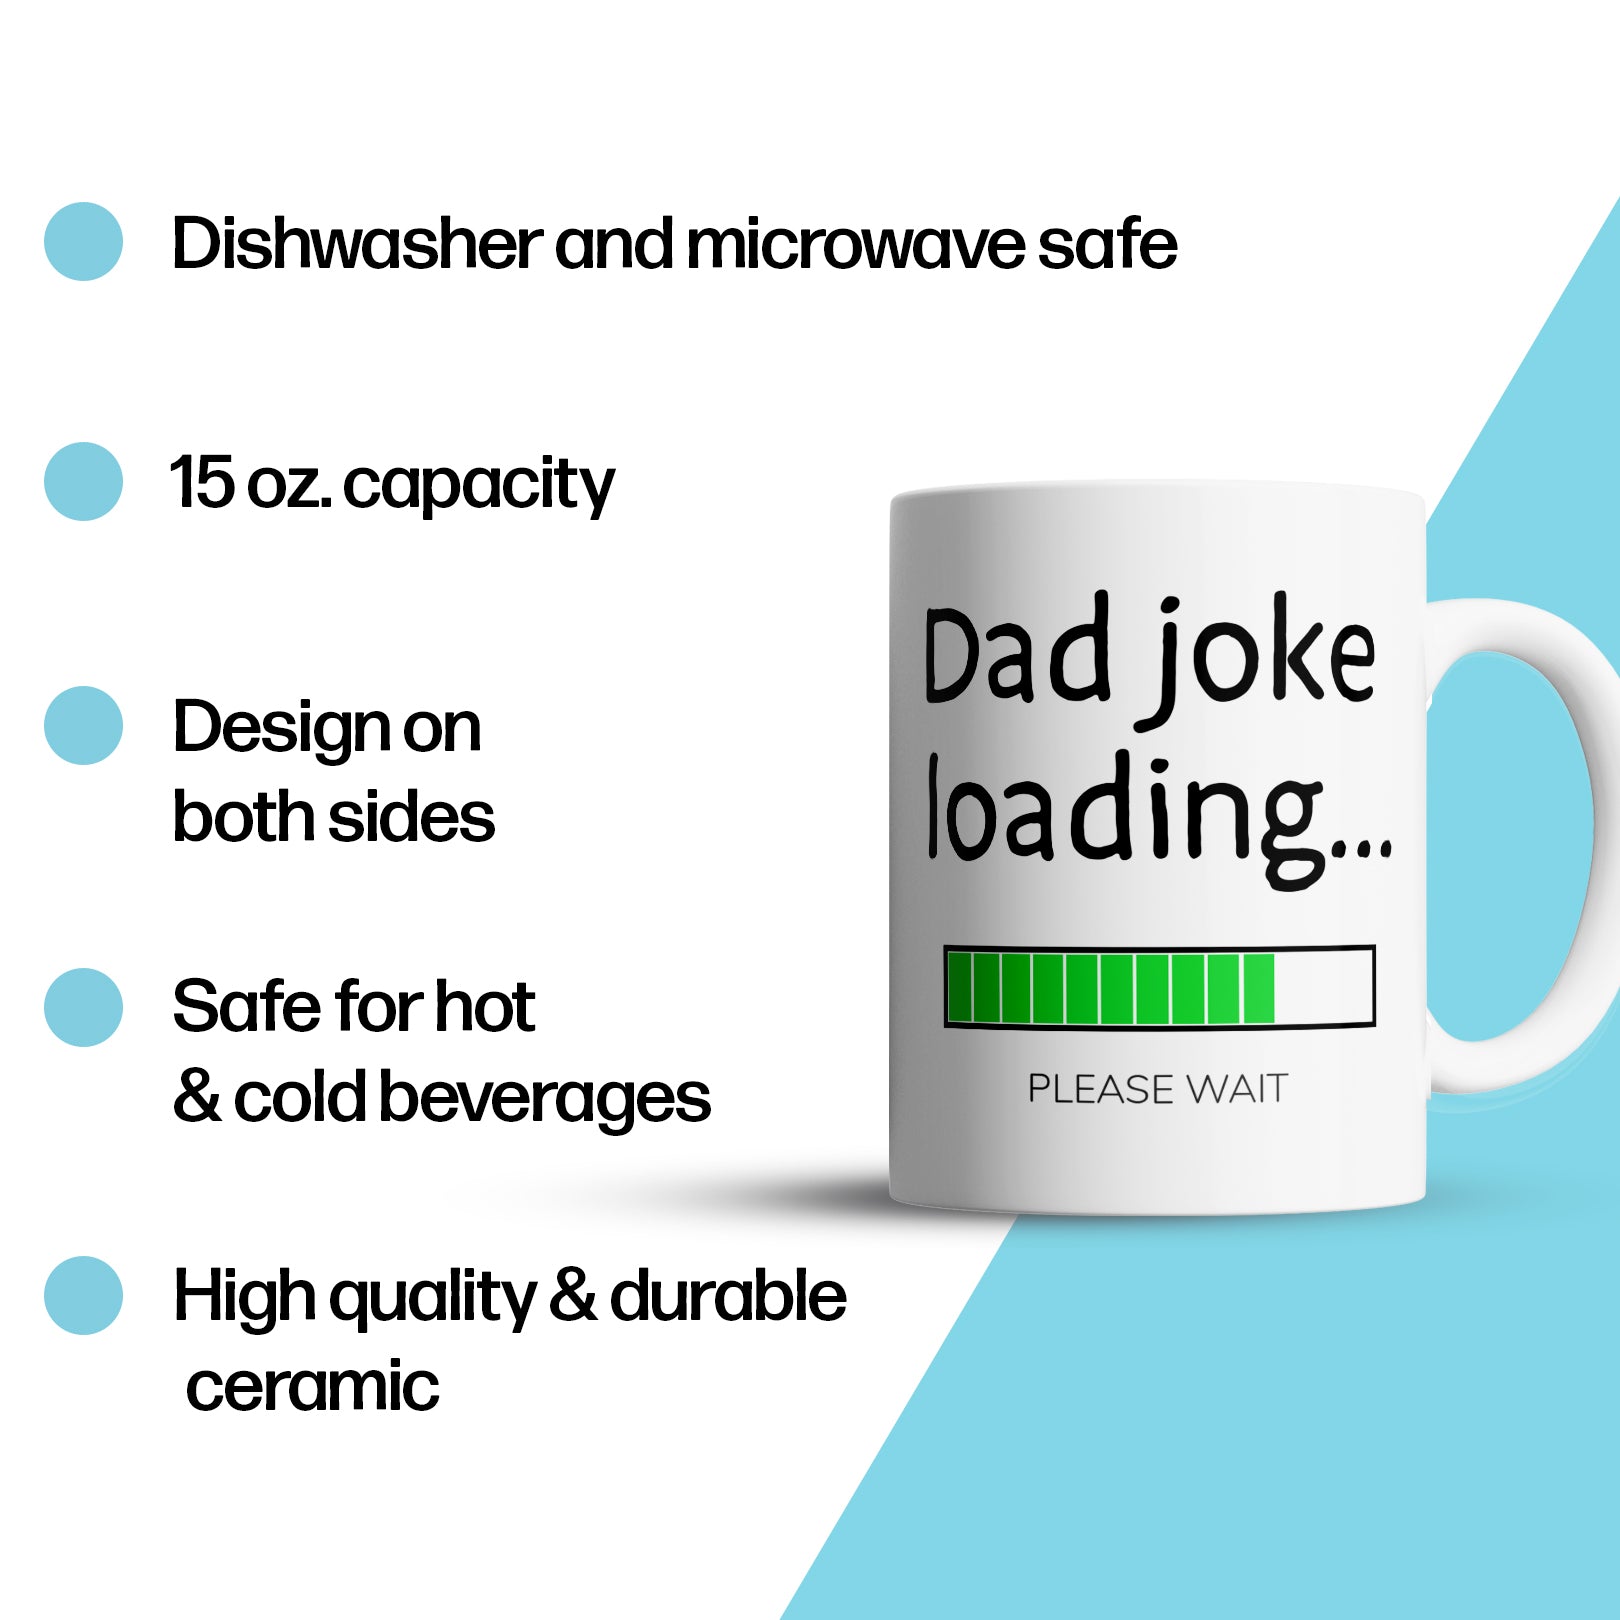 “Dad Joke Loading” Large 15oz Mug - Funny Gift for Dad